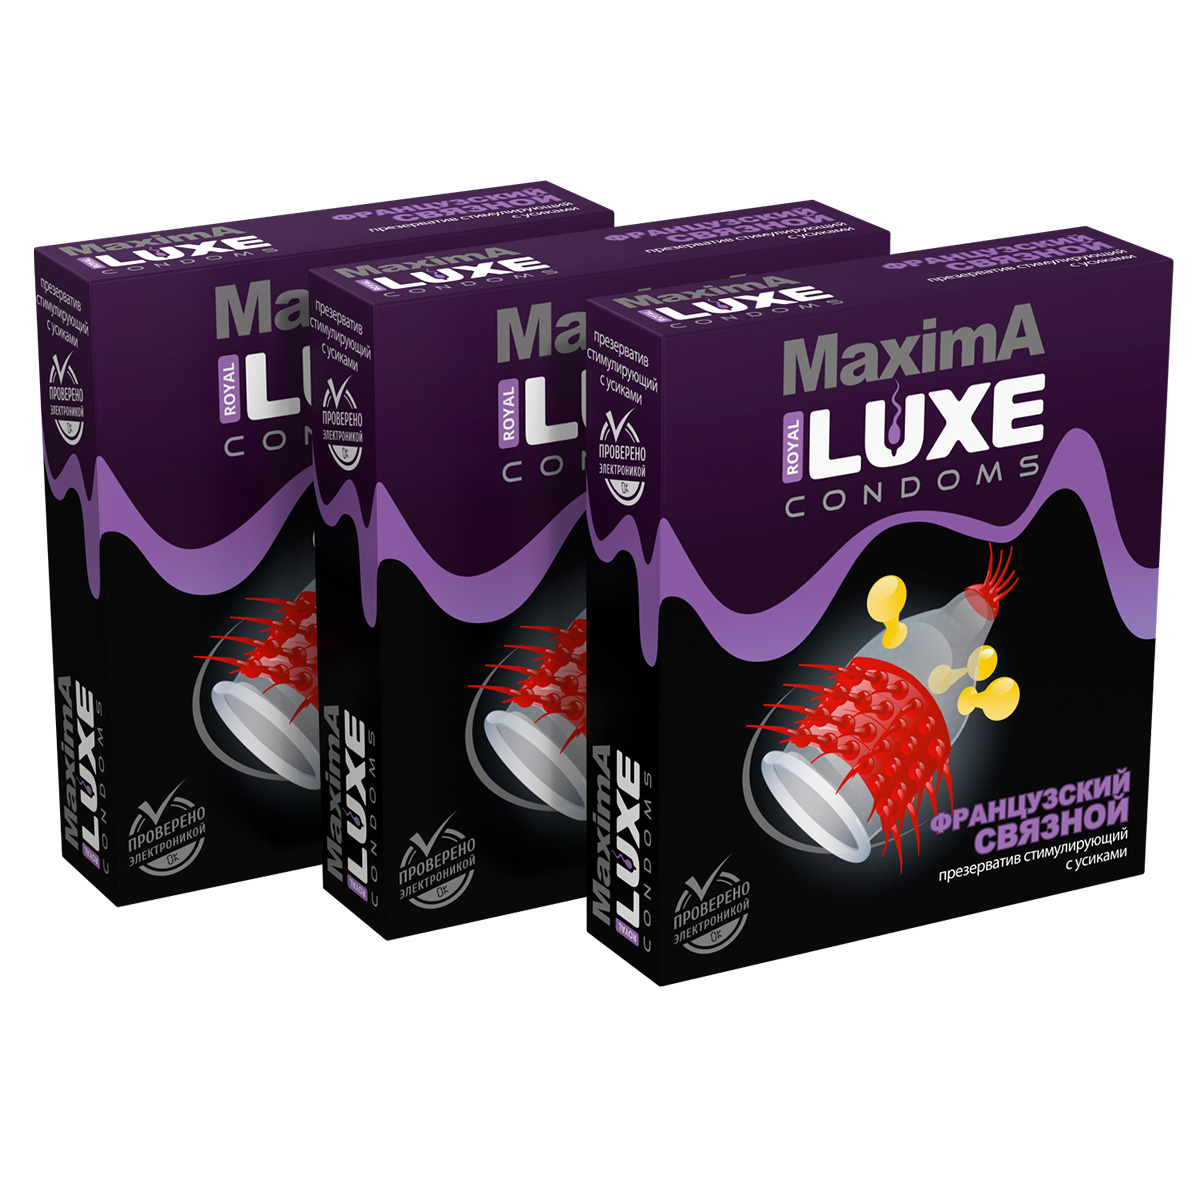 Maxima французский связной, Презервативы Luxe Maxima Французский Связной комплект из 3 упаковок, латекс  - купить